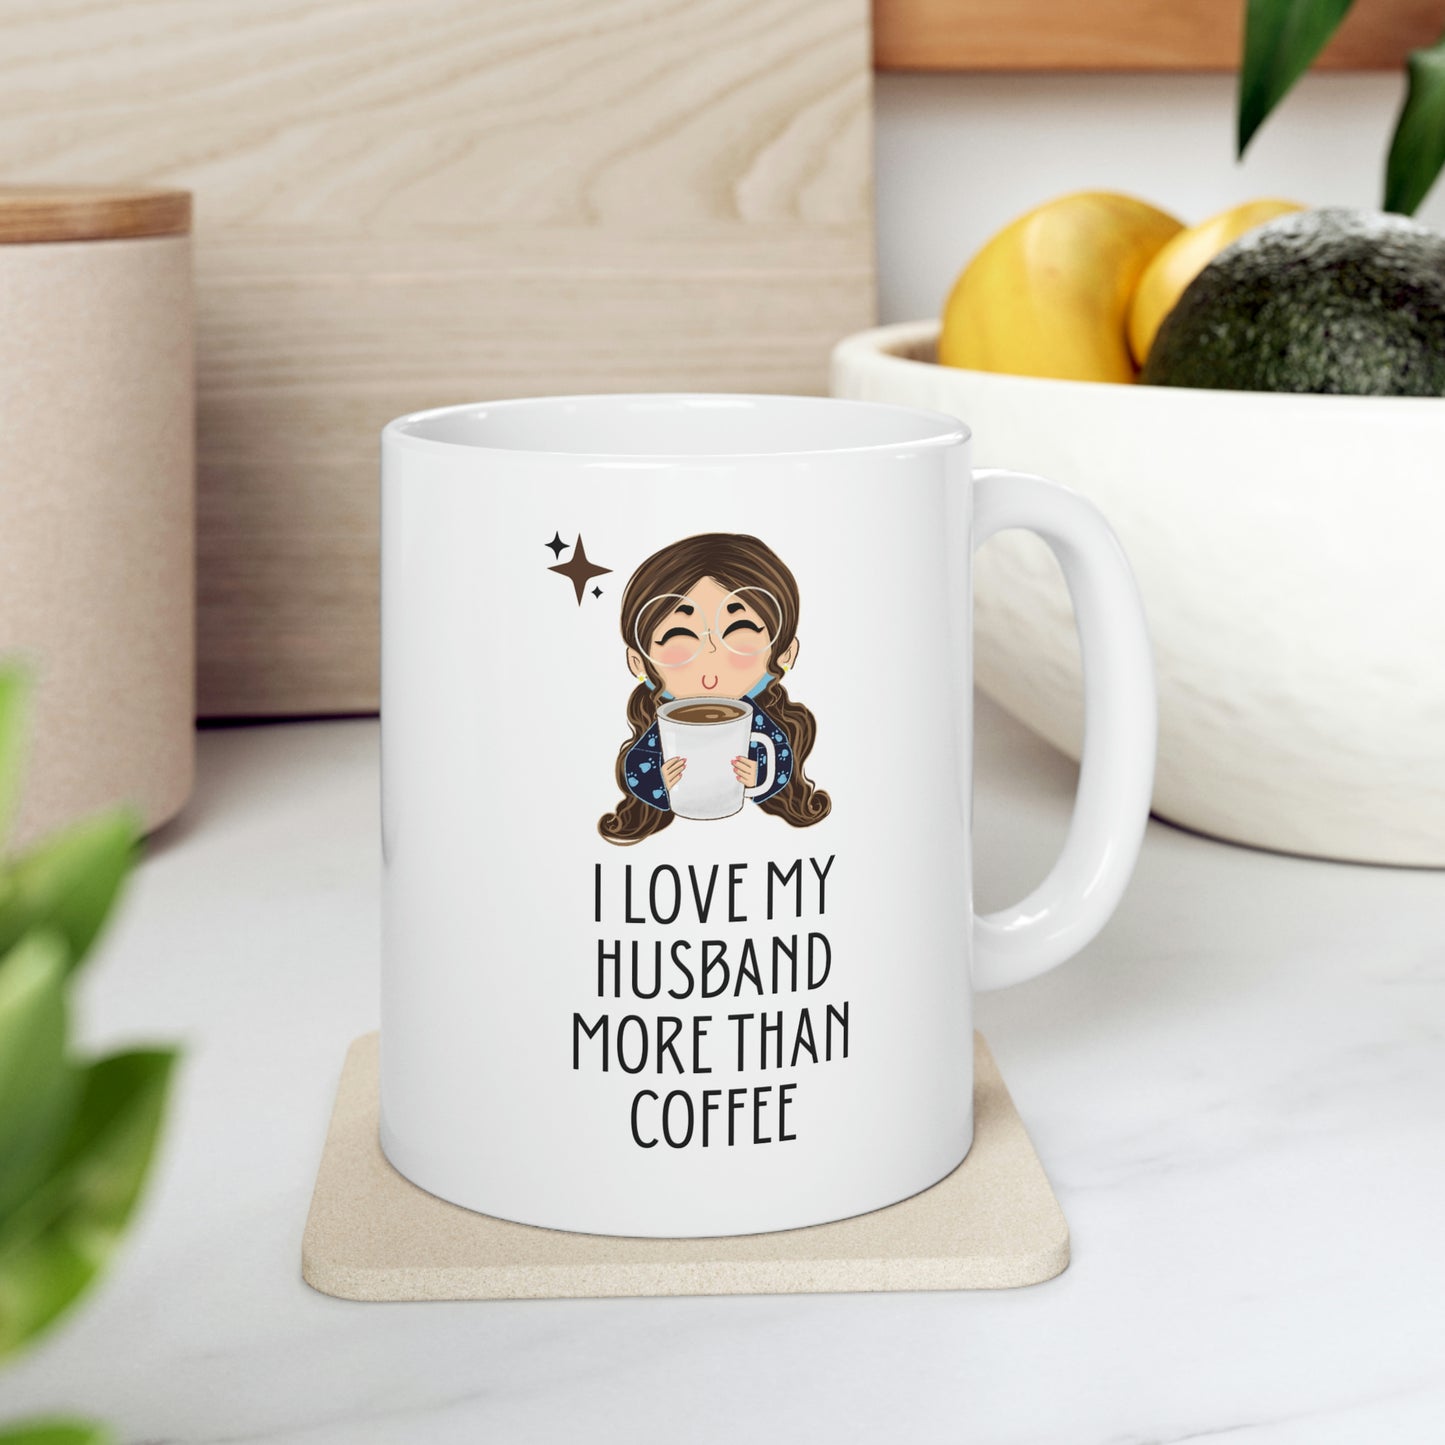 I Love My Husband More Than Coffee - Ceramic Mug 11oz